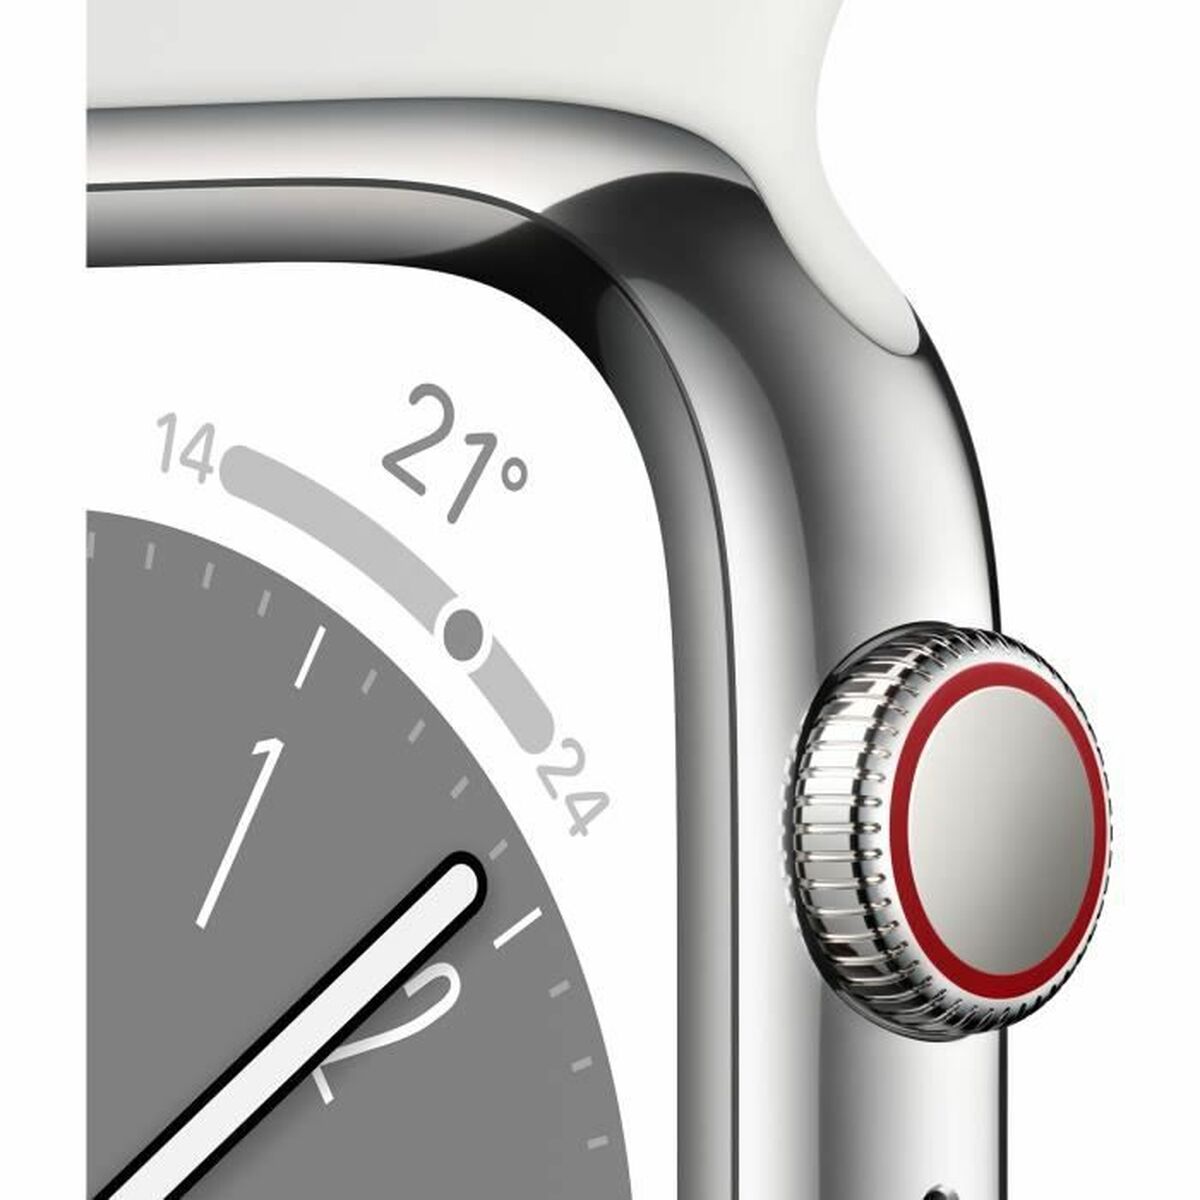 Reloj Inteligente Apple Watch Series 8 Watchos 9 32gb 4g  MKP